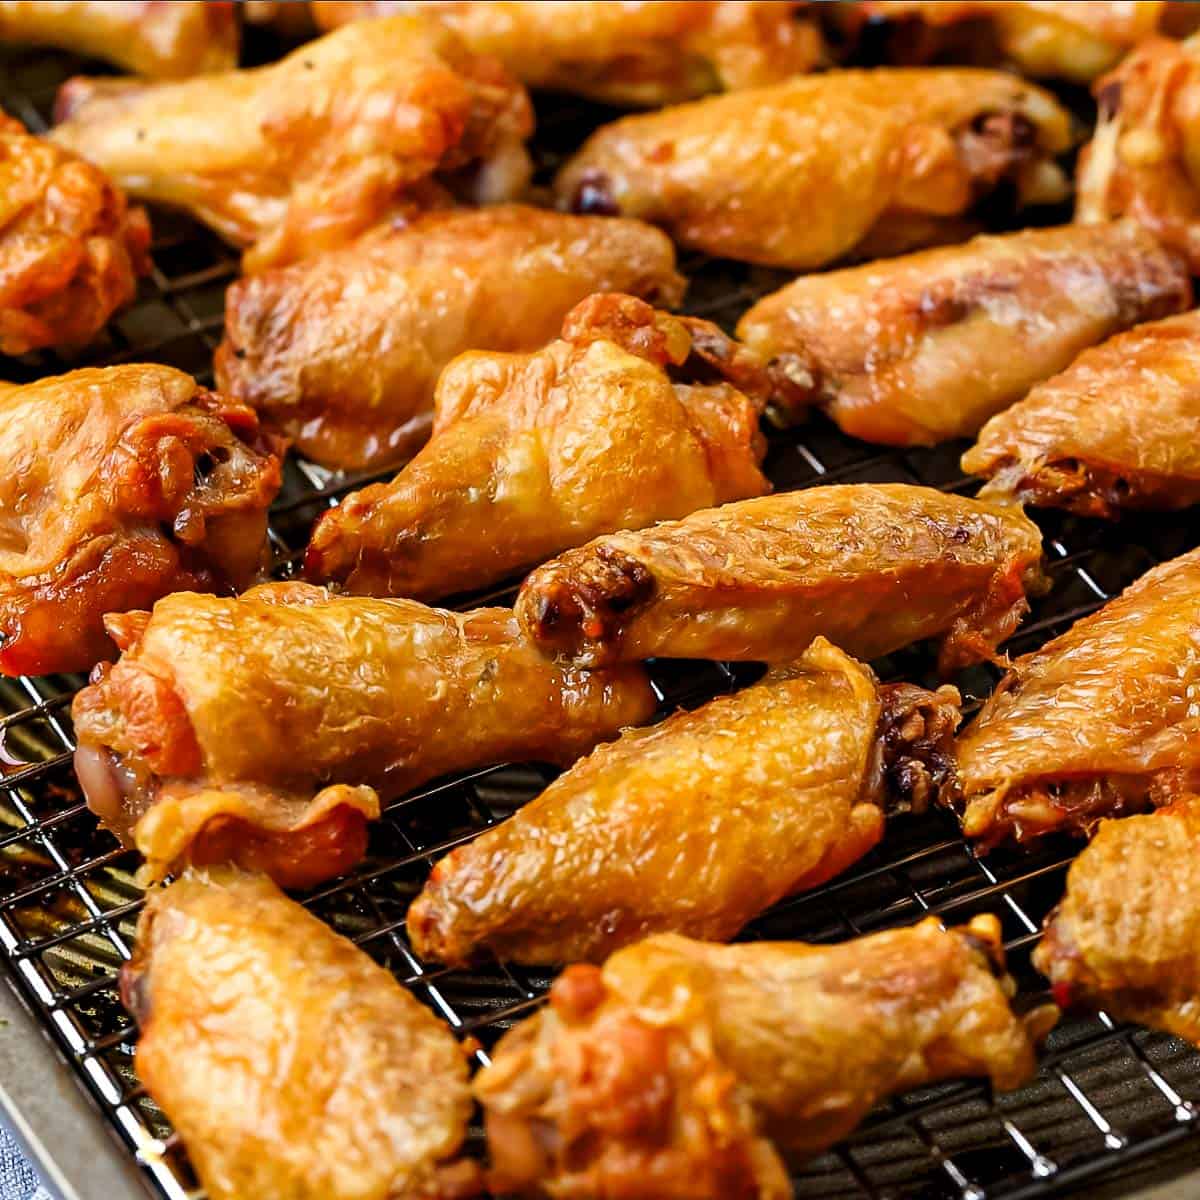 Crispy baked chicken wings with golden brown crispy skin.